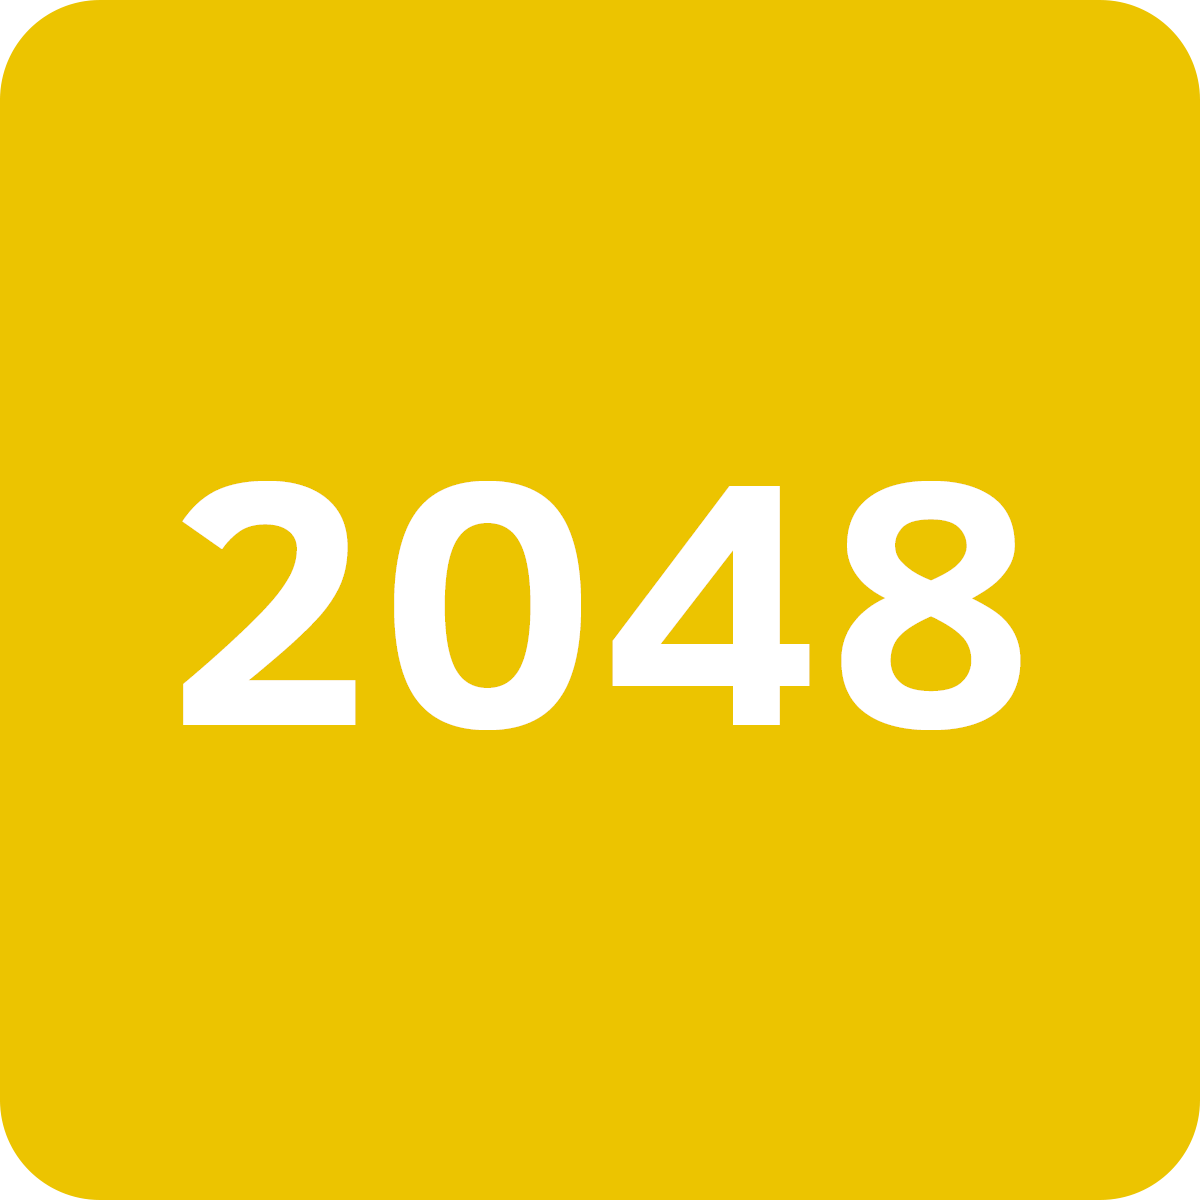 2048 online games